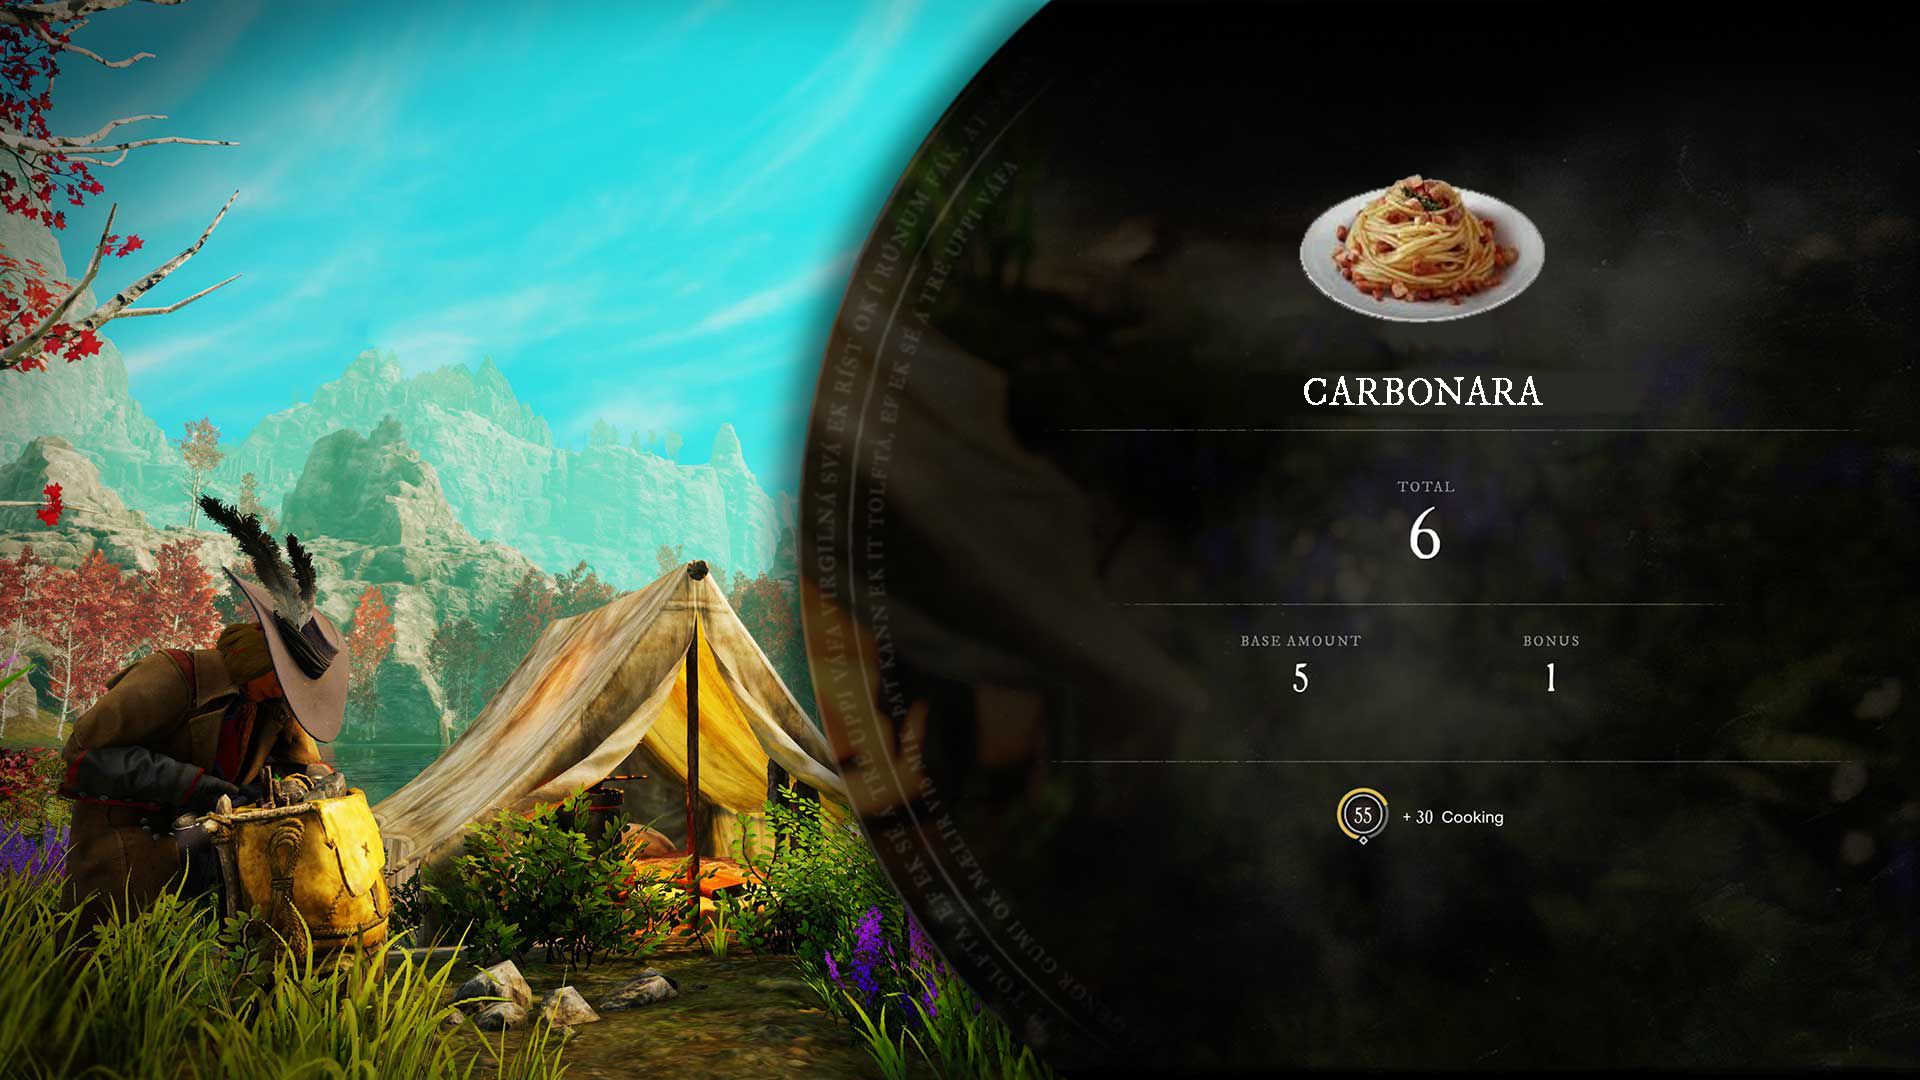 A player cooks a Carbonara recipe at a campsite